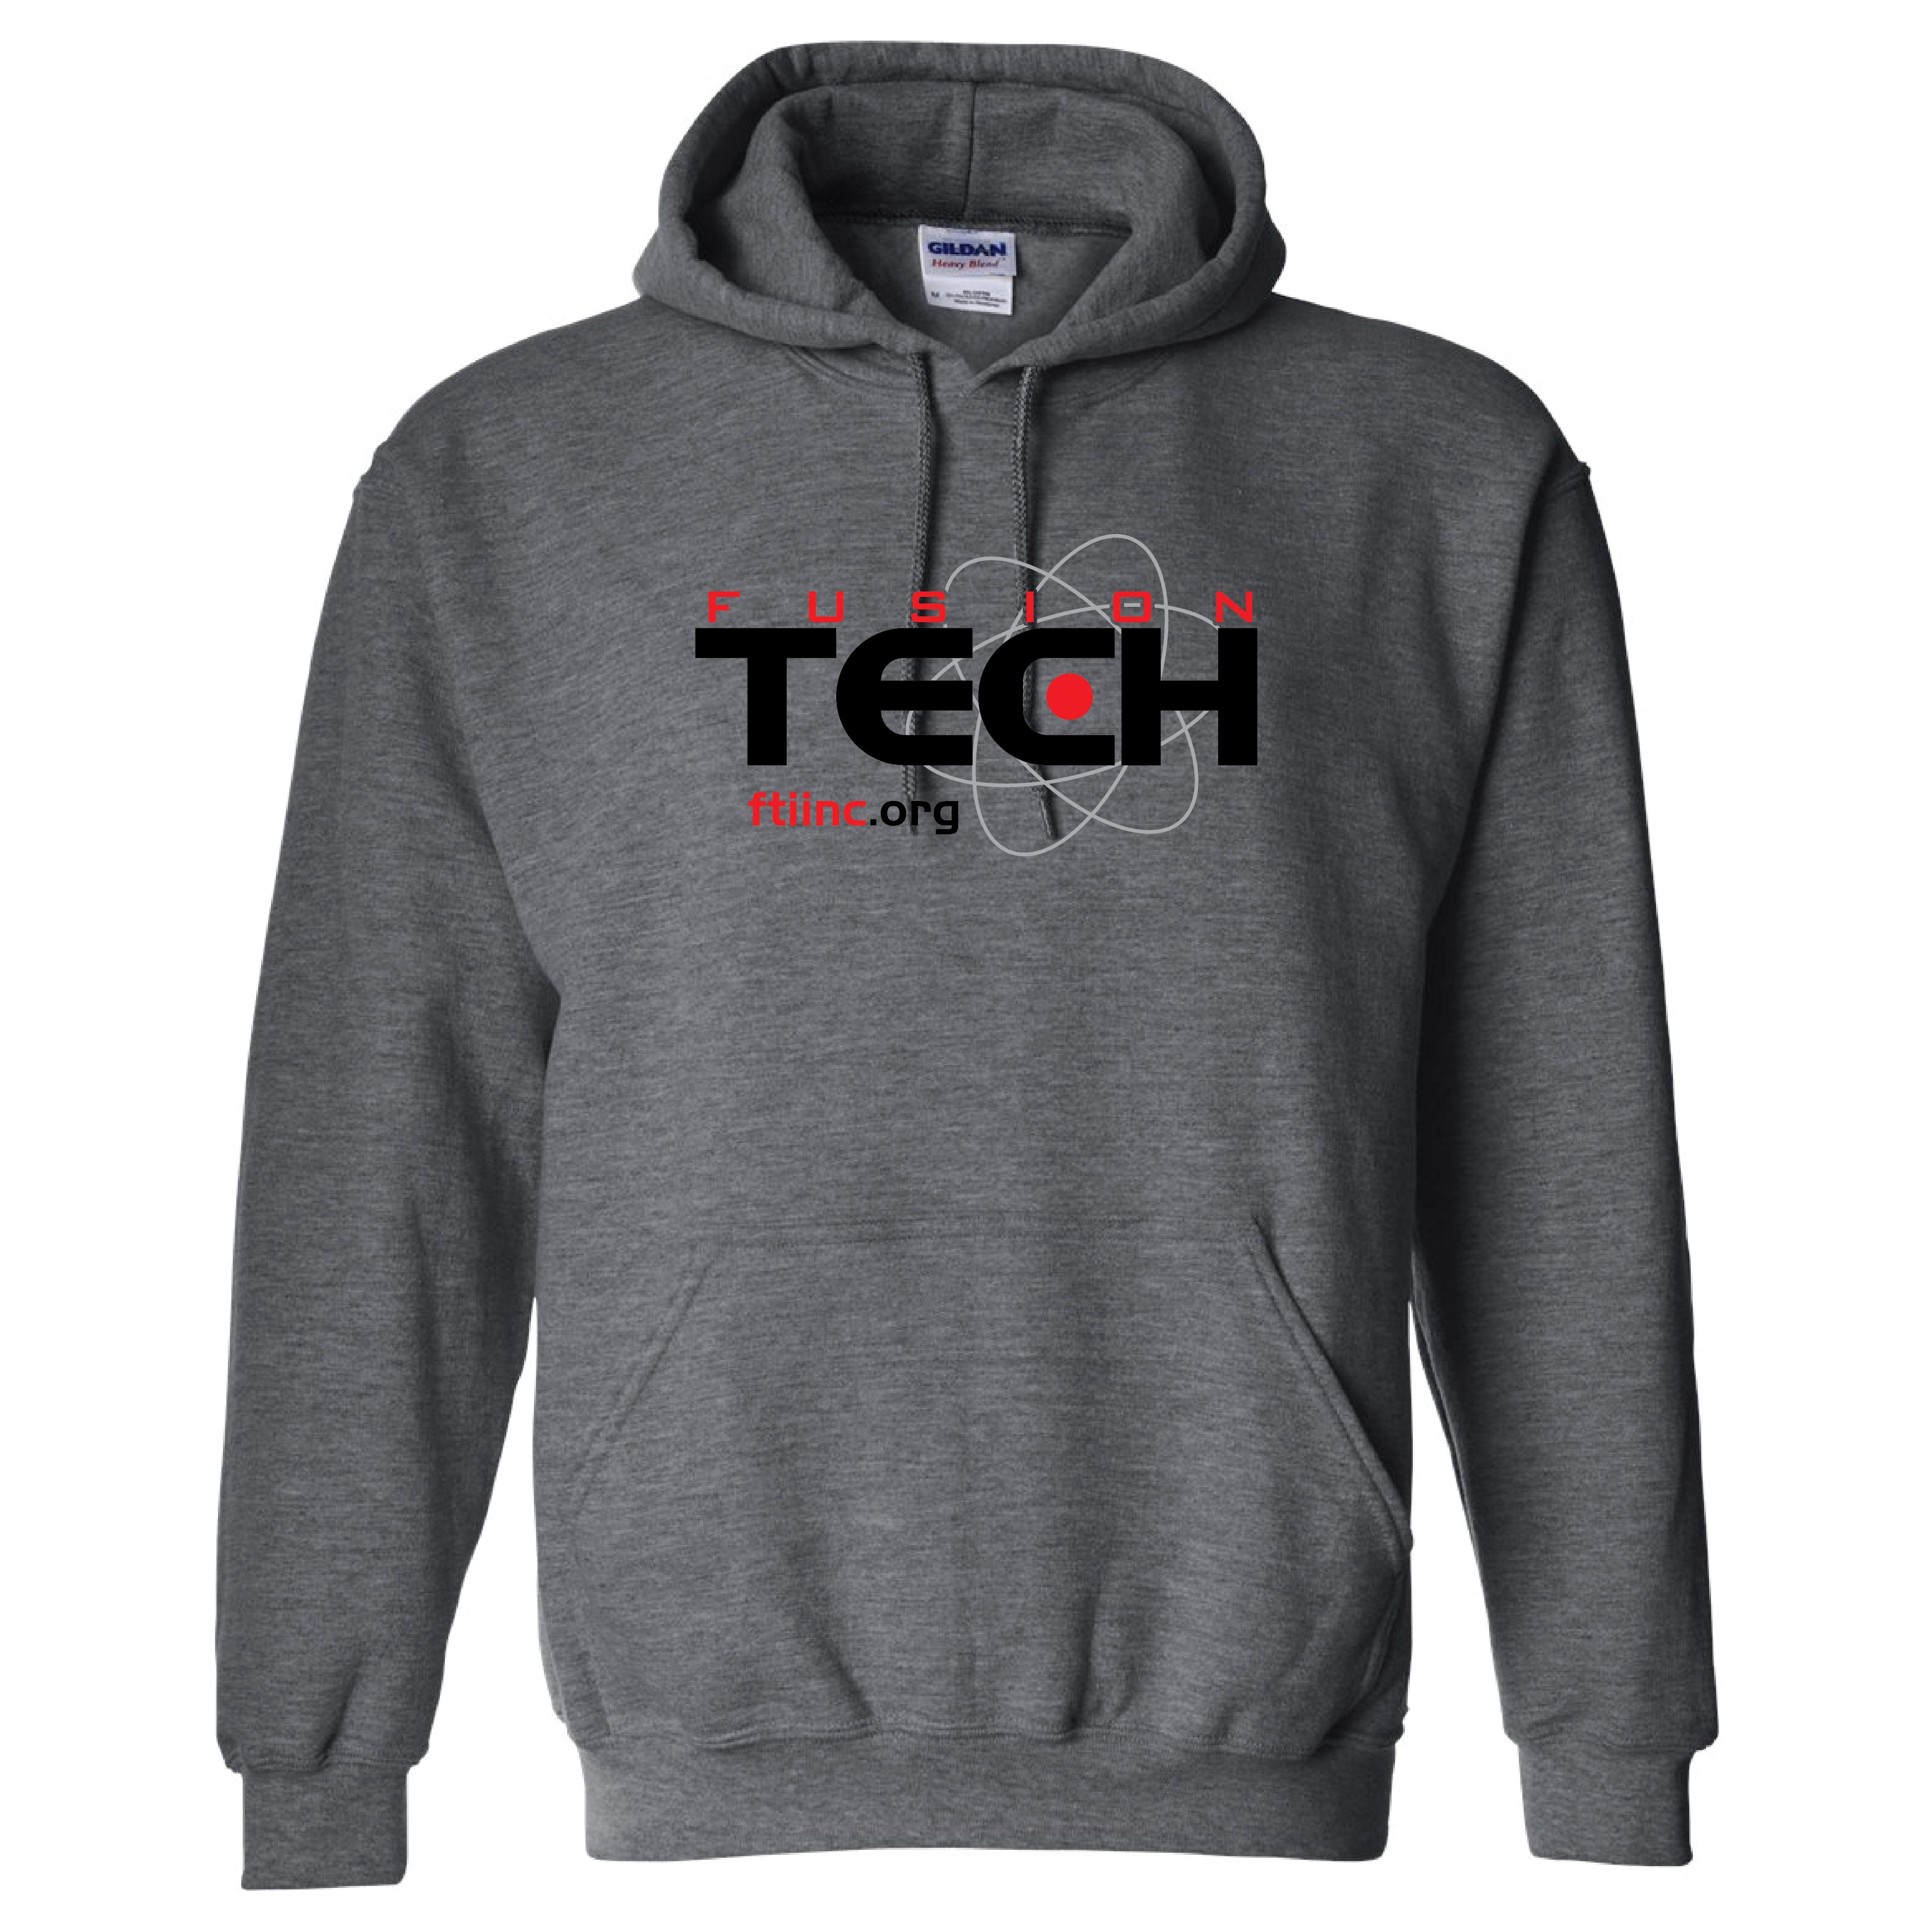 Fusion Tech Screenprinted Hooded Sweatshirt